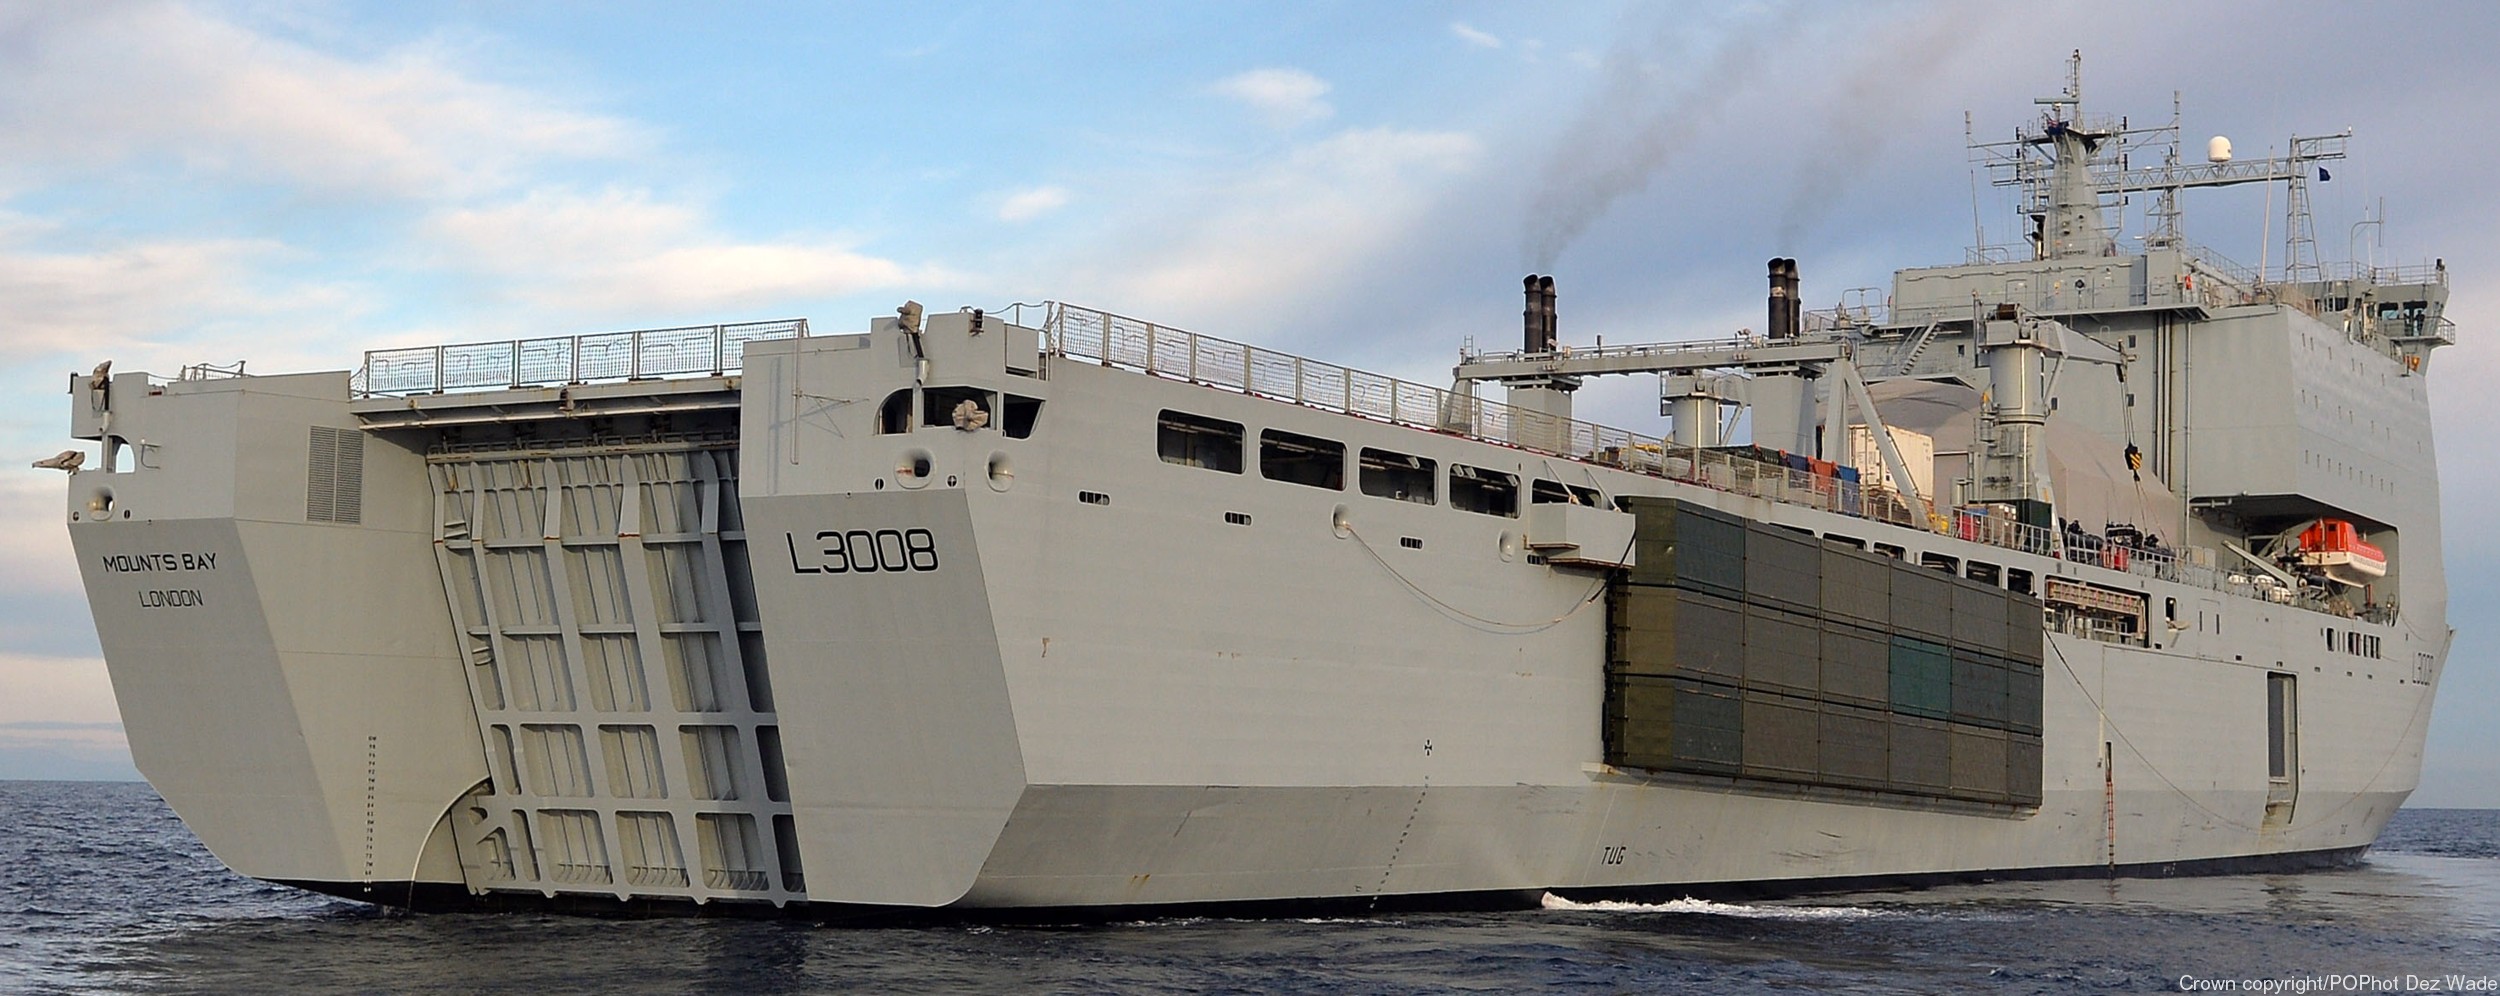 l-3008 rfa mounts bay amphibious dock landing ship transport royal fleet auxilary navy 16